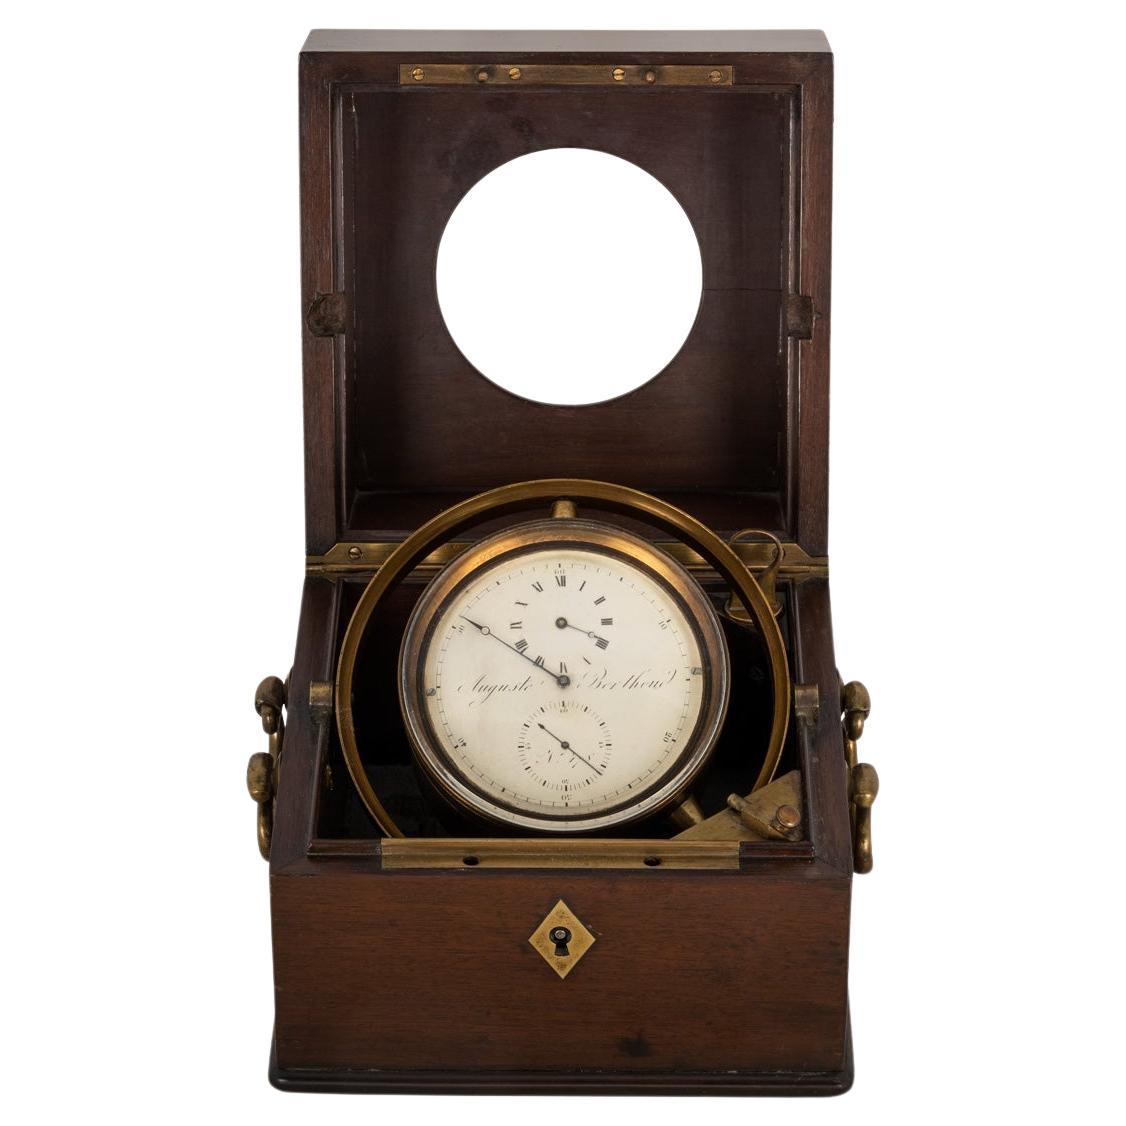 Auguste Berthoud. A Rare Antique Experimental Marine Chronometer C1840 For Sale